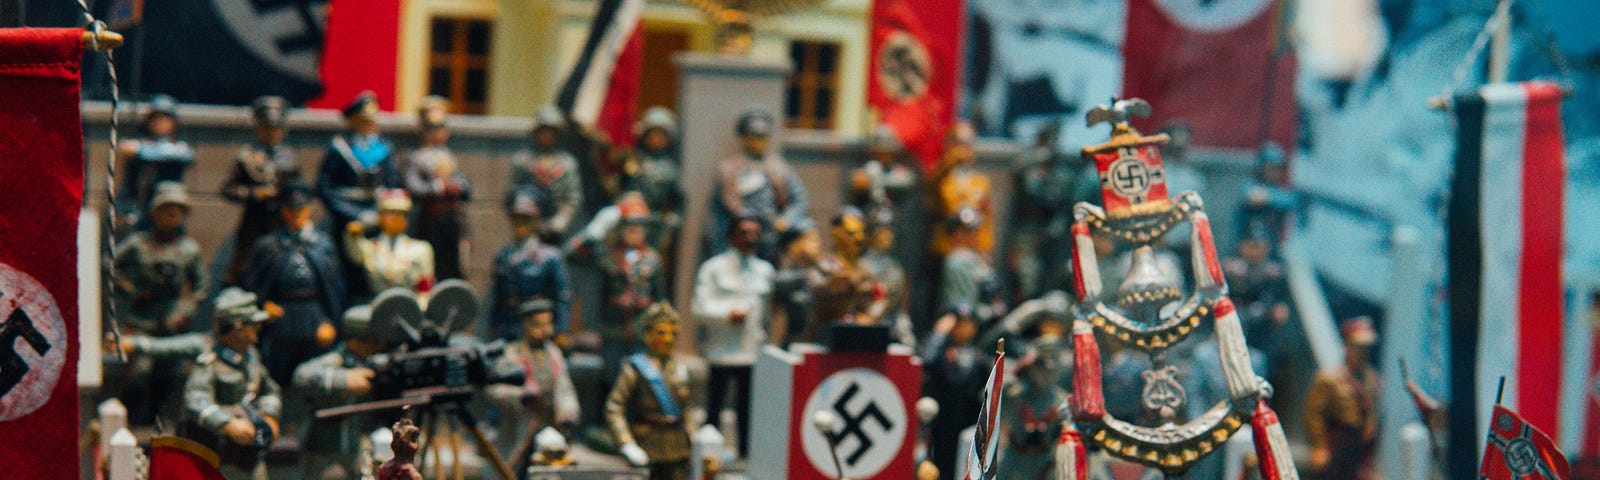 Nazi Replicas